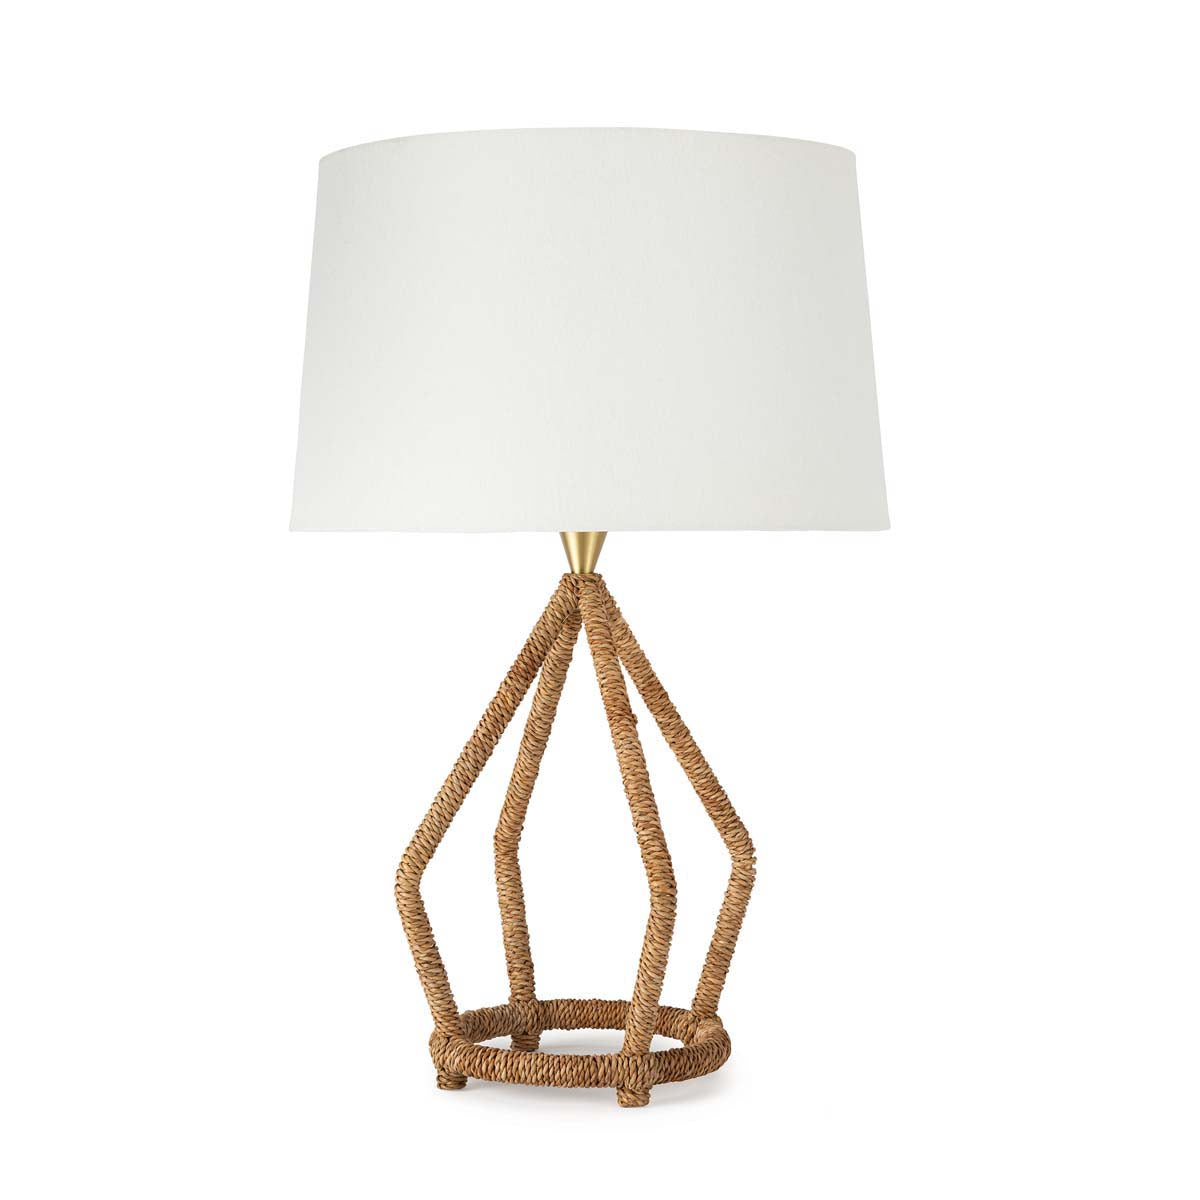 Regina Andrew Bimini Table Lamp